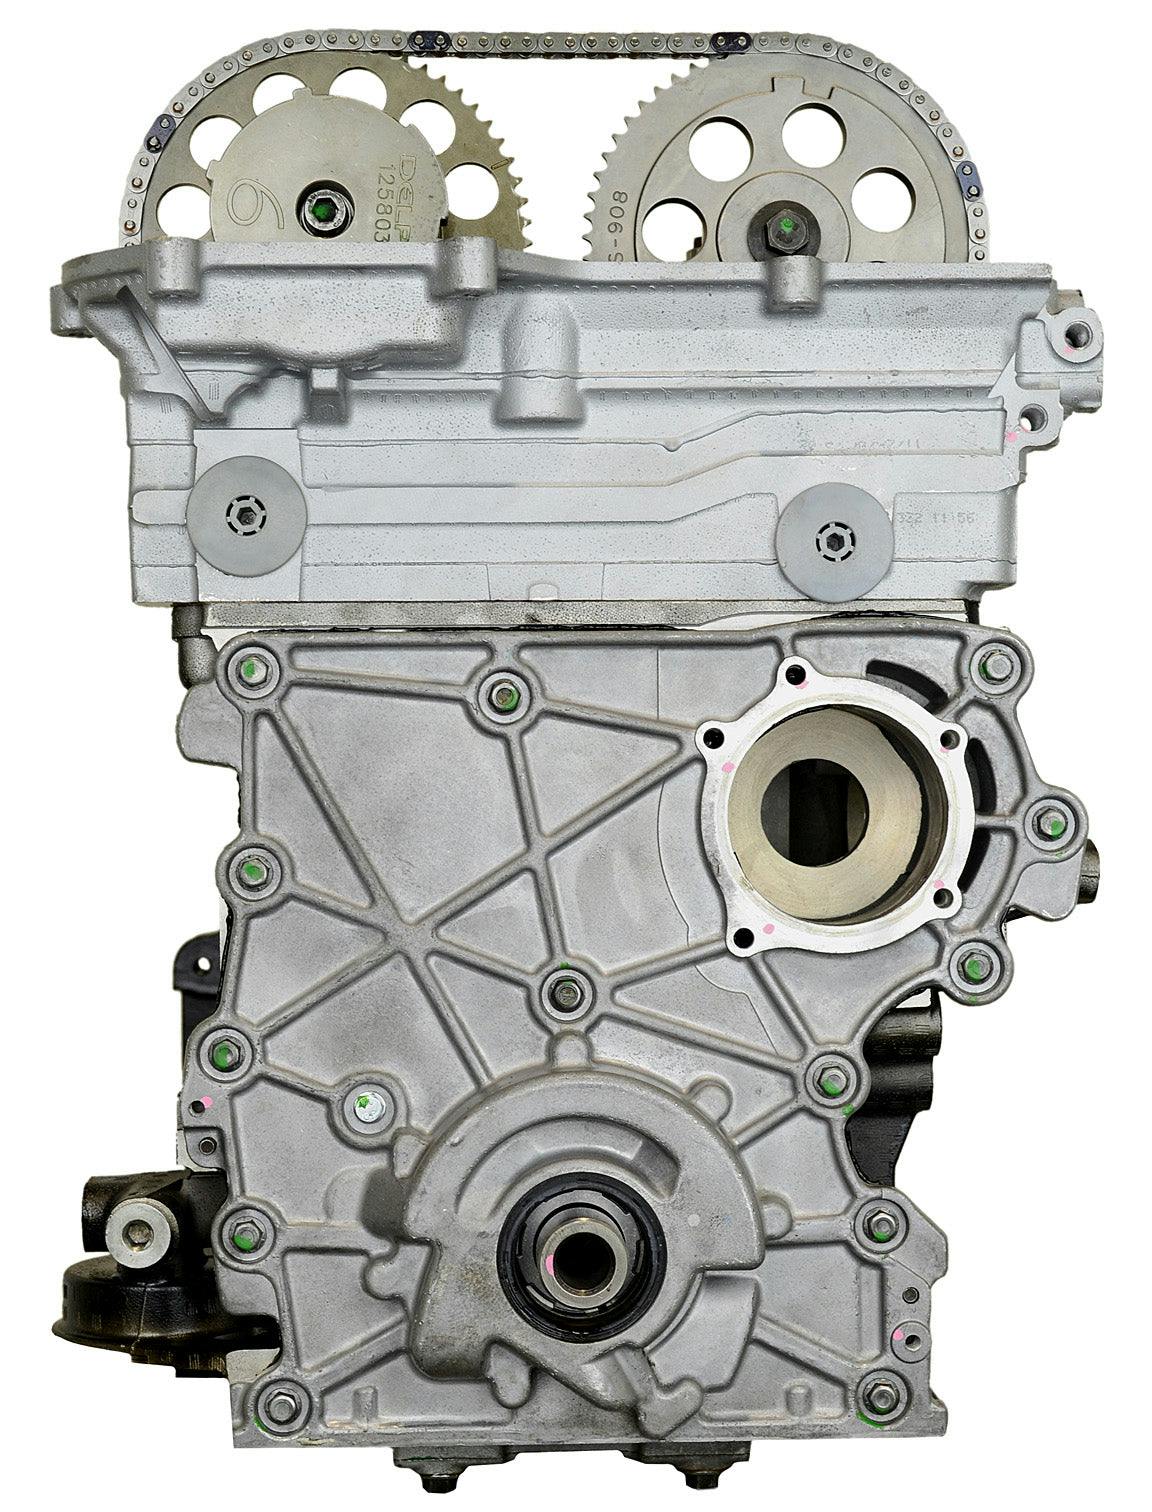 4.2L Inline-6 Engine for 2006-2007 Buick Rainier/Chevrolet Trailblazer, Trailblazer EXT/GMC Envoy, Envoy XL/Isuzu Ascender/Saab 9-7x